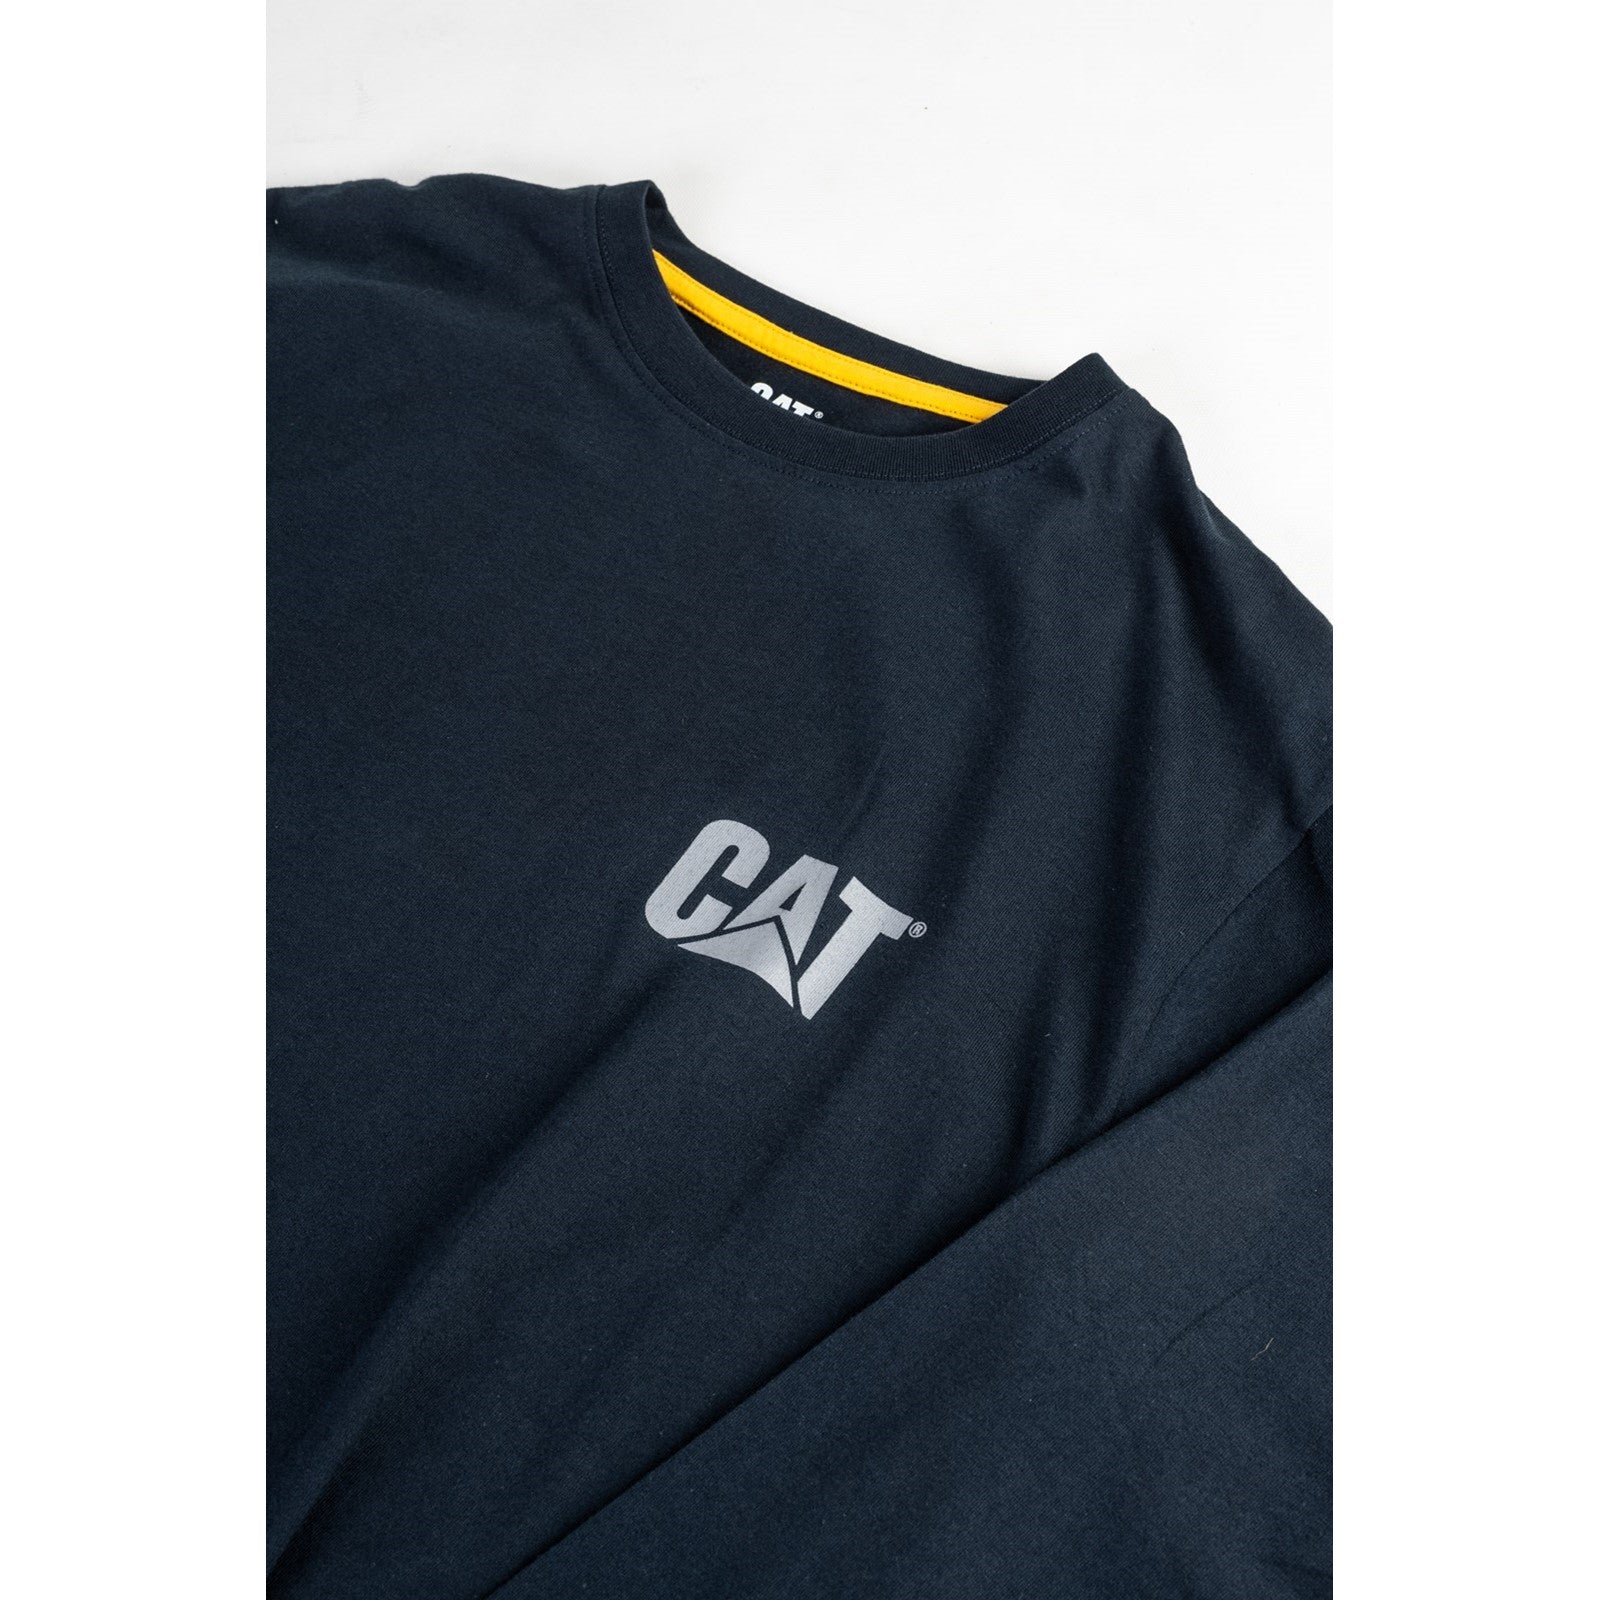 Caterpillar Trademark Banner Long Sleeve T Shirt in Dark Marine 